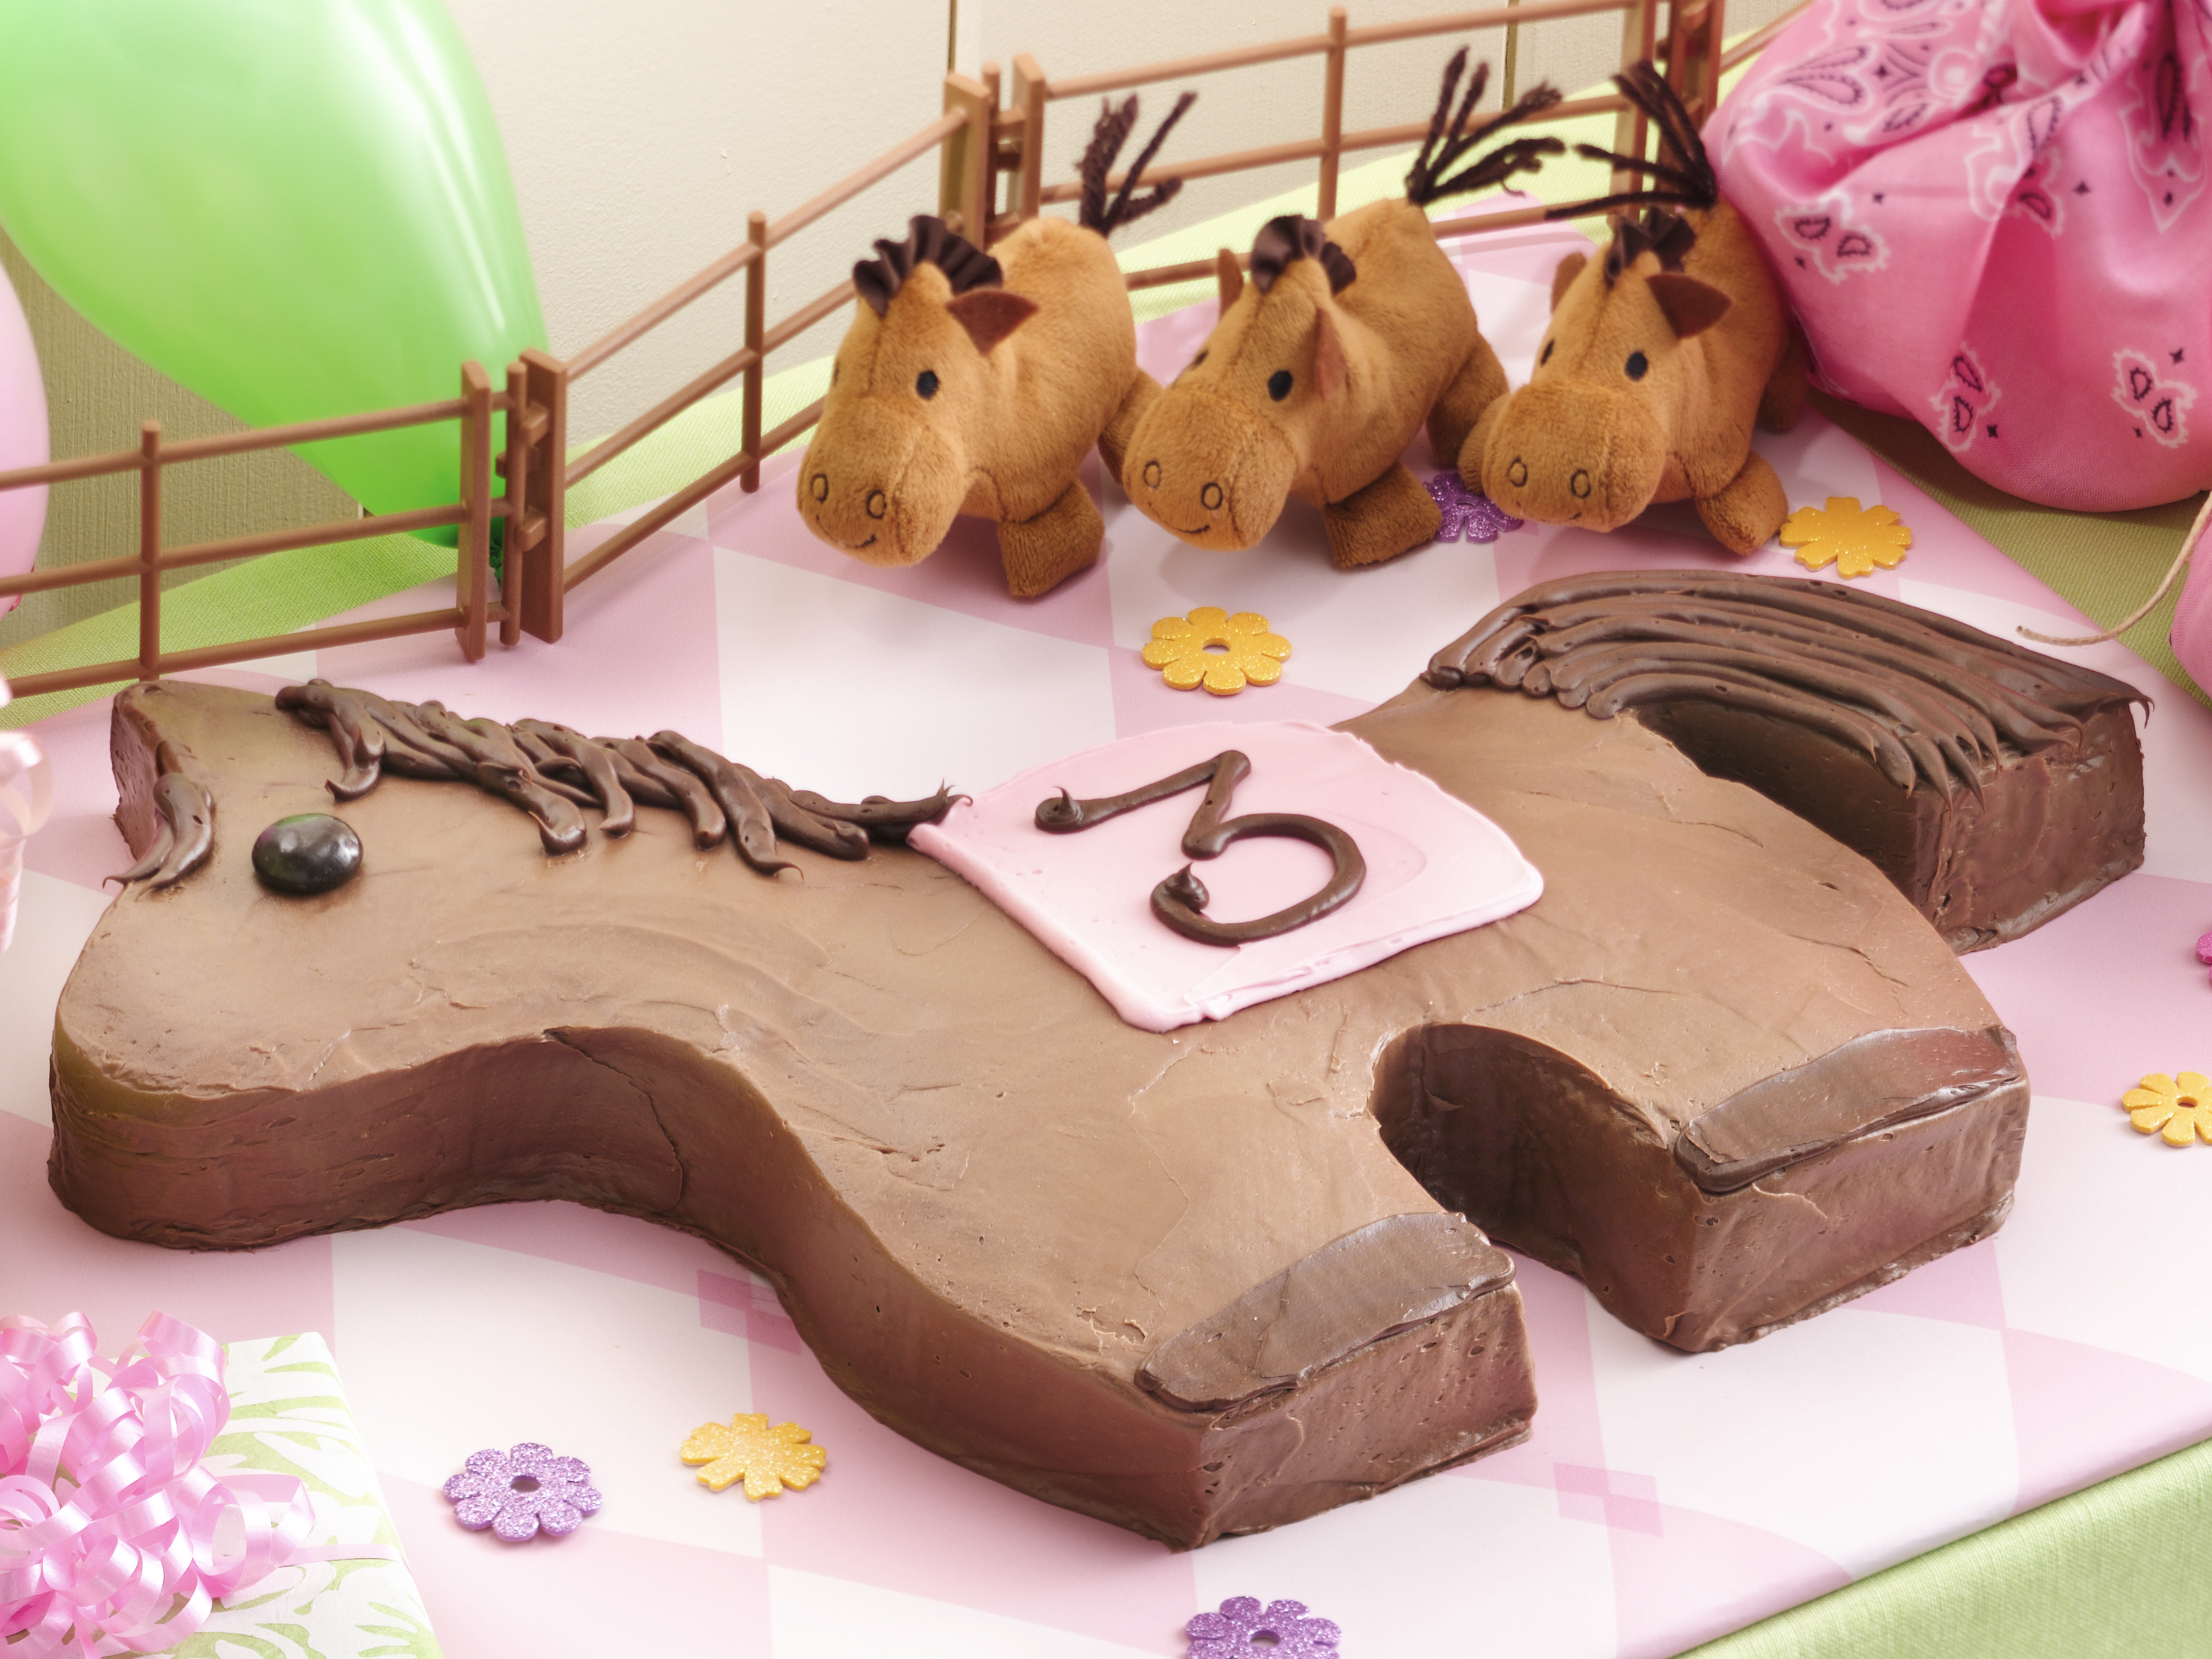 Happy 30th Cake Topper - 30th Birthday Cake Topper | SugarBoo